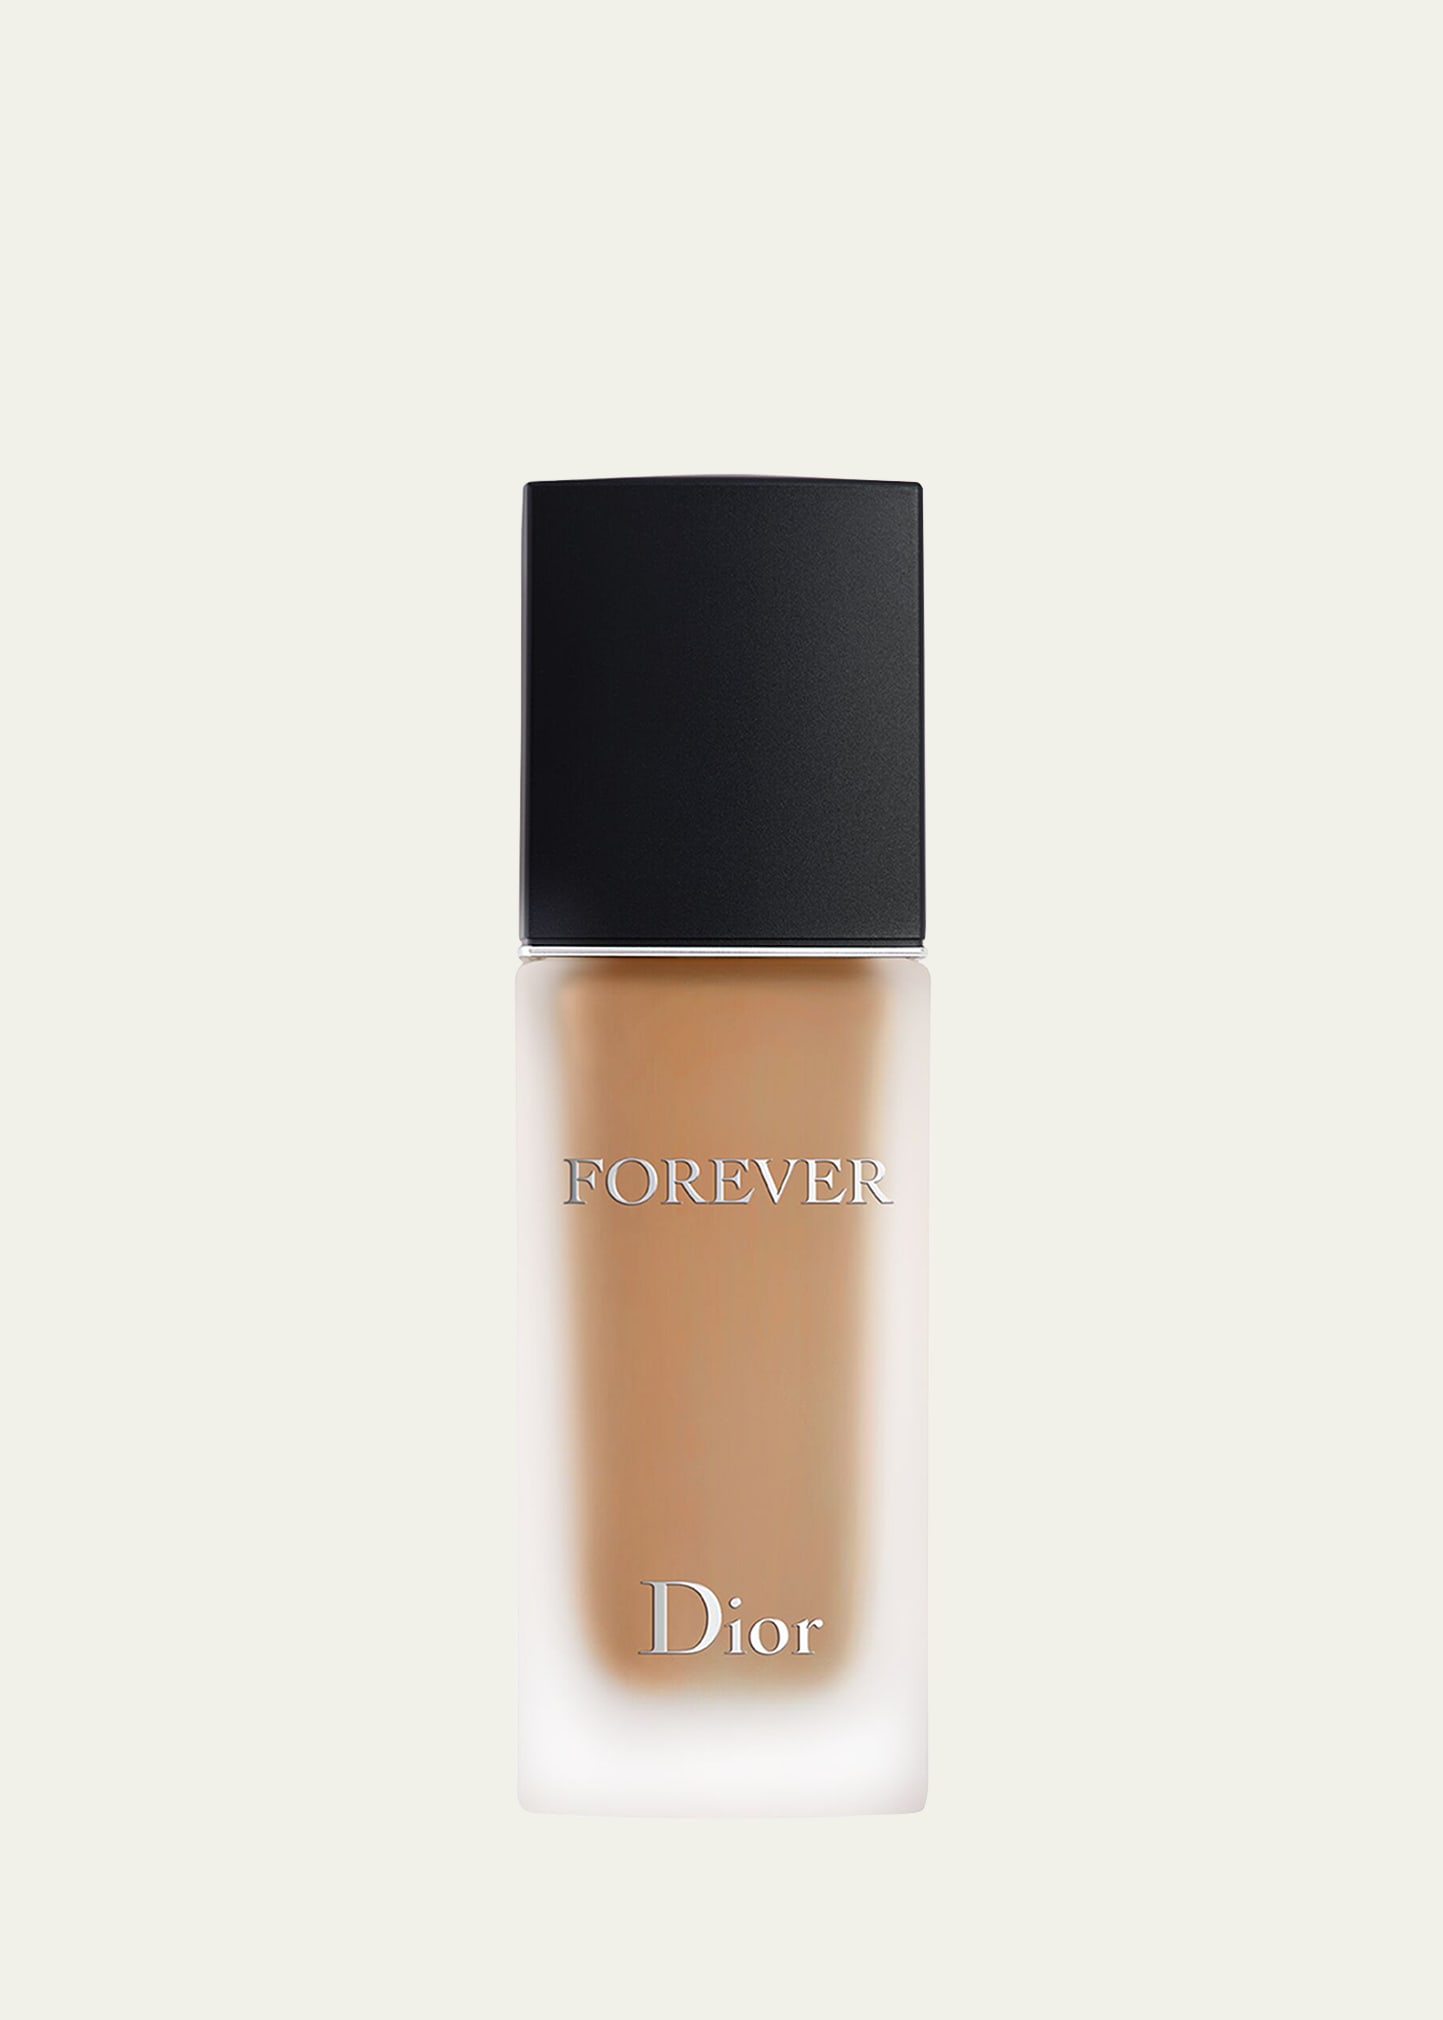 Dior 1 Oz. Forever Matte Skincare Foundation Spf 15 In 4 Warm